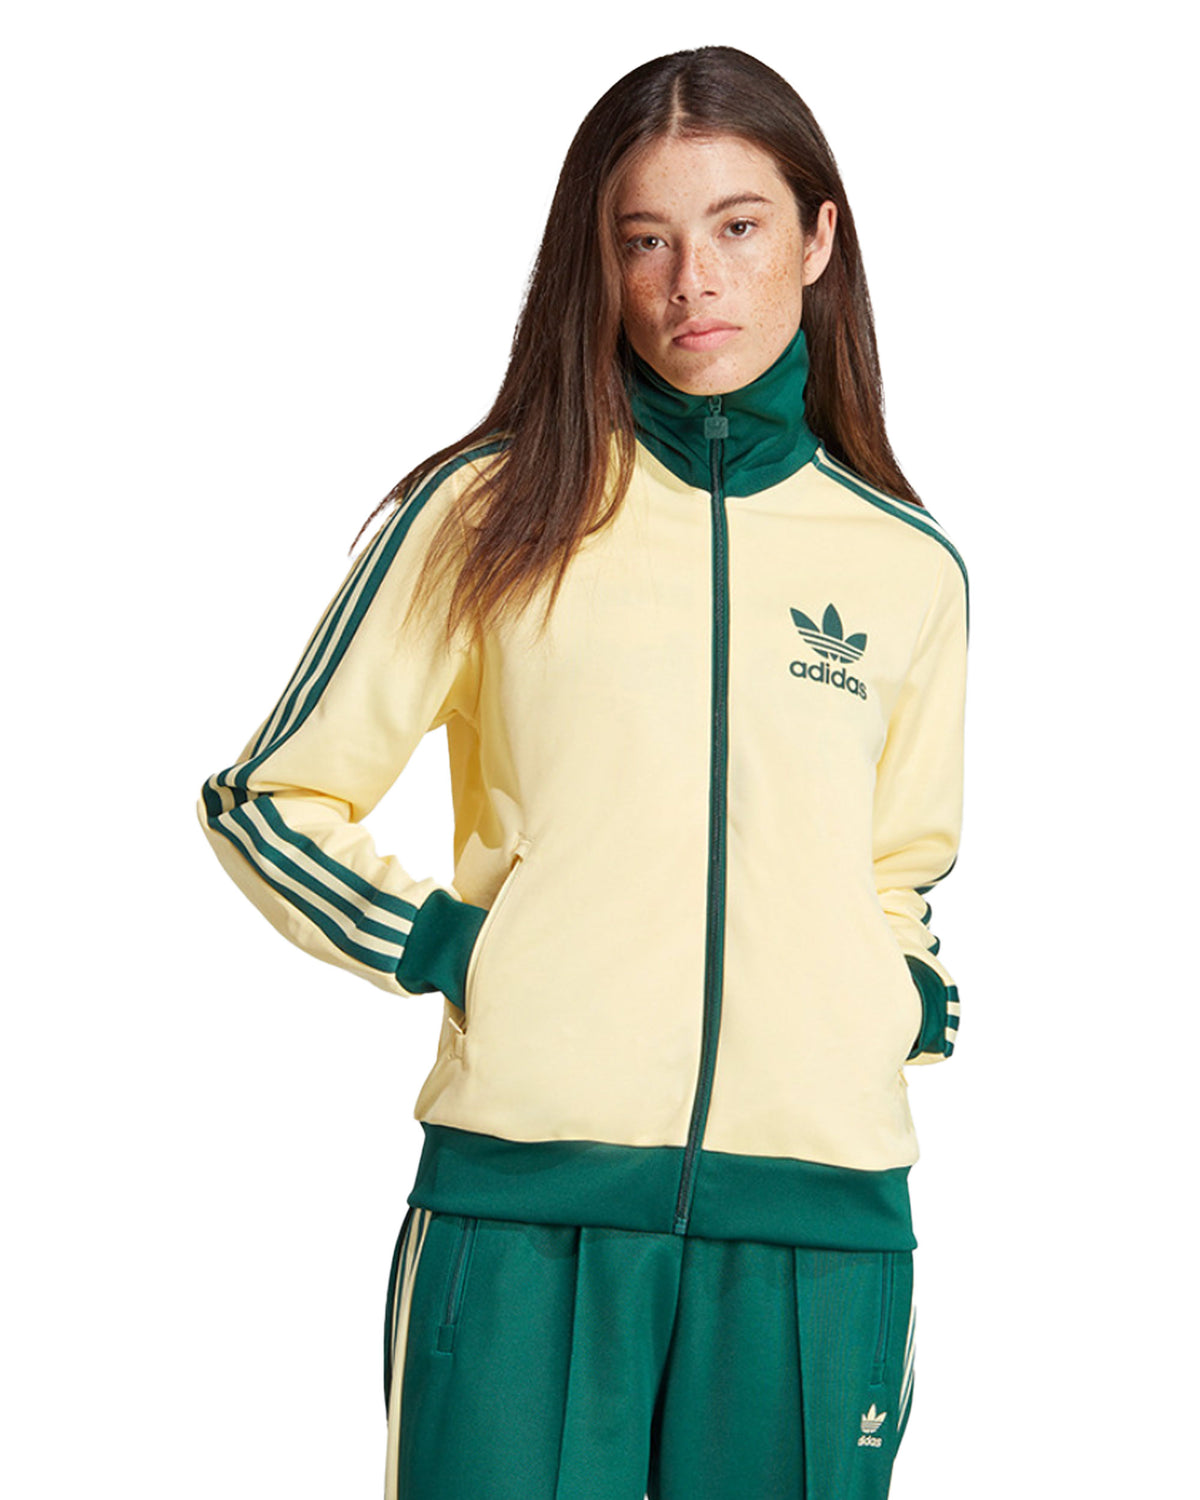 Woman's Sweatshirt Adidas Beckenbauer Tracktop Yellow Green